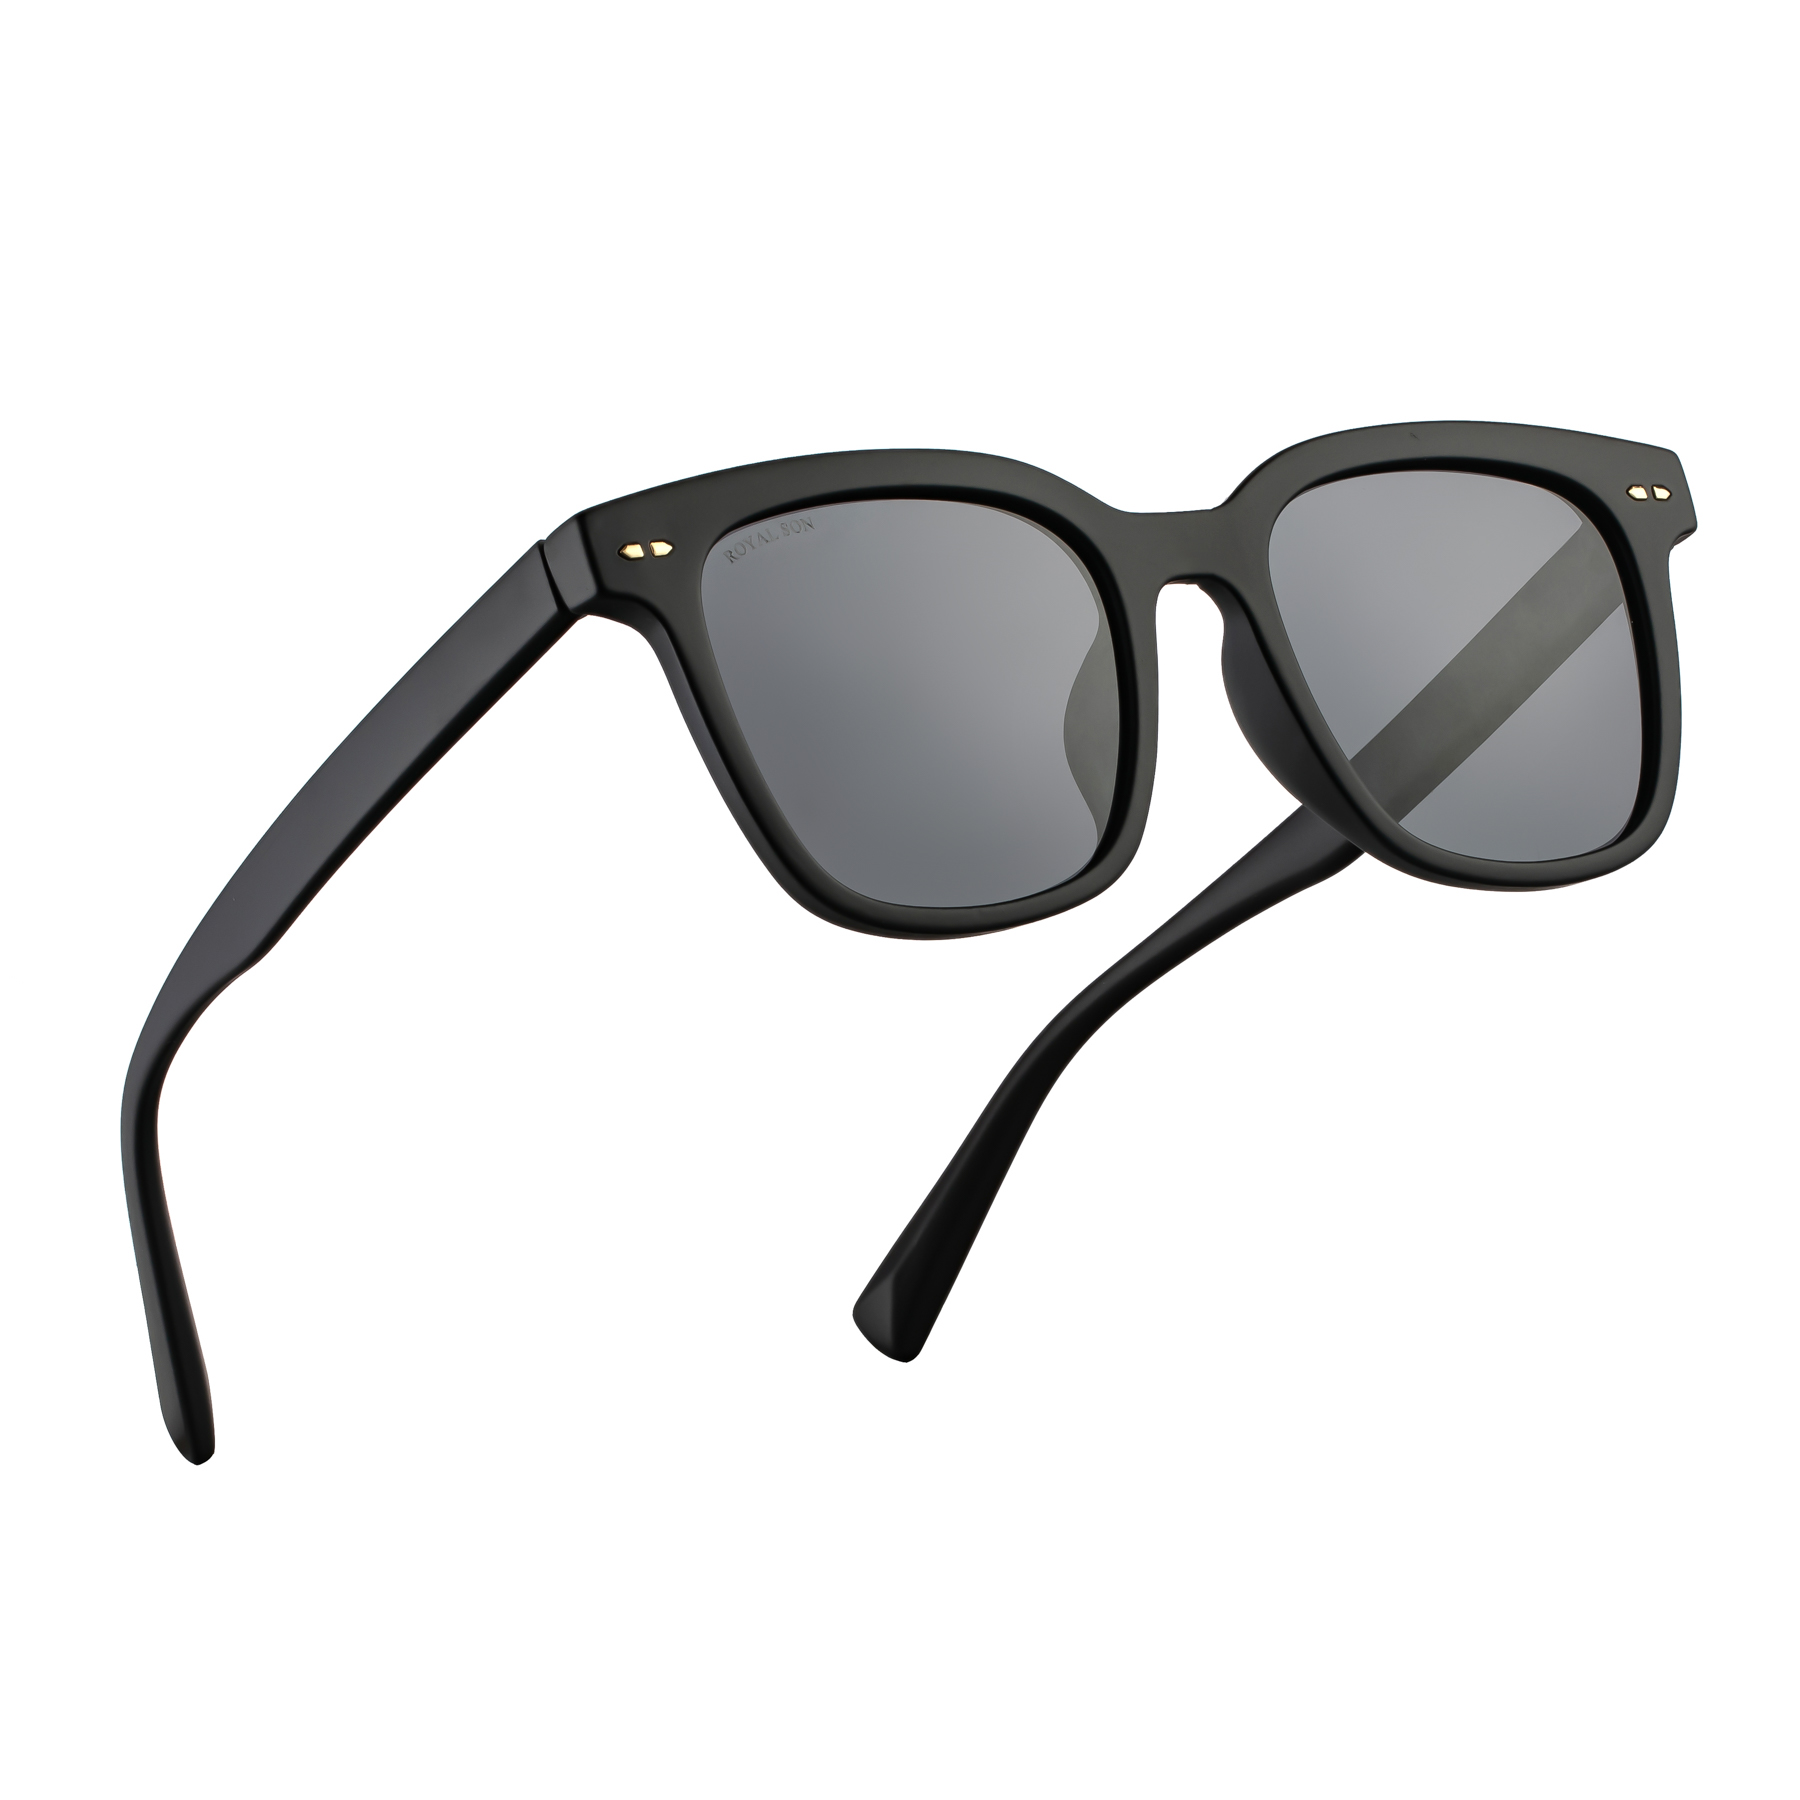 Royal Son Fashion Square Polarized Sunglasses for Men Stylish UV Protection - Black